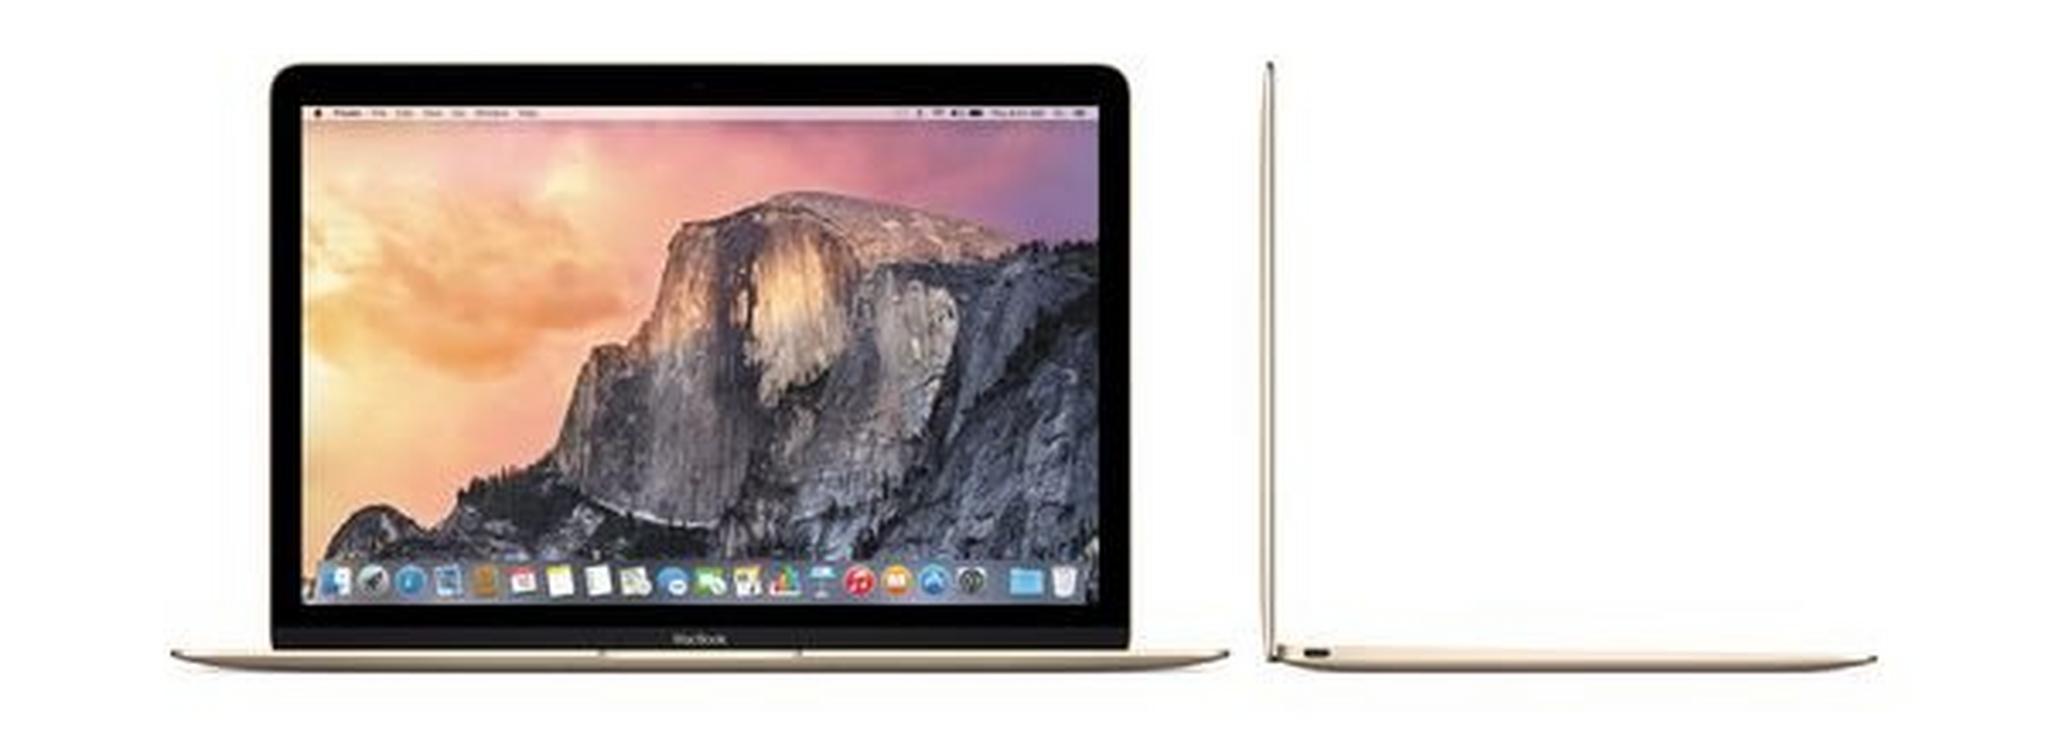 Apple MacBook 2017 Core-m3 8GB RAM 256GB SSD 12-inch Laptop (MNYK2AE/A) - Gold